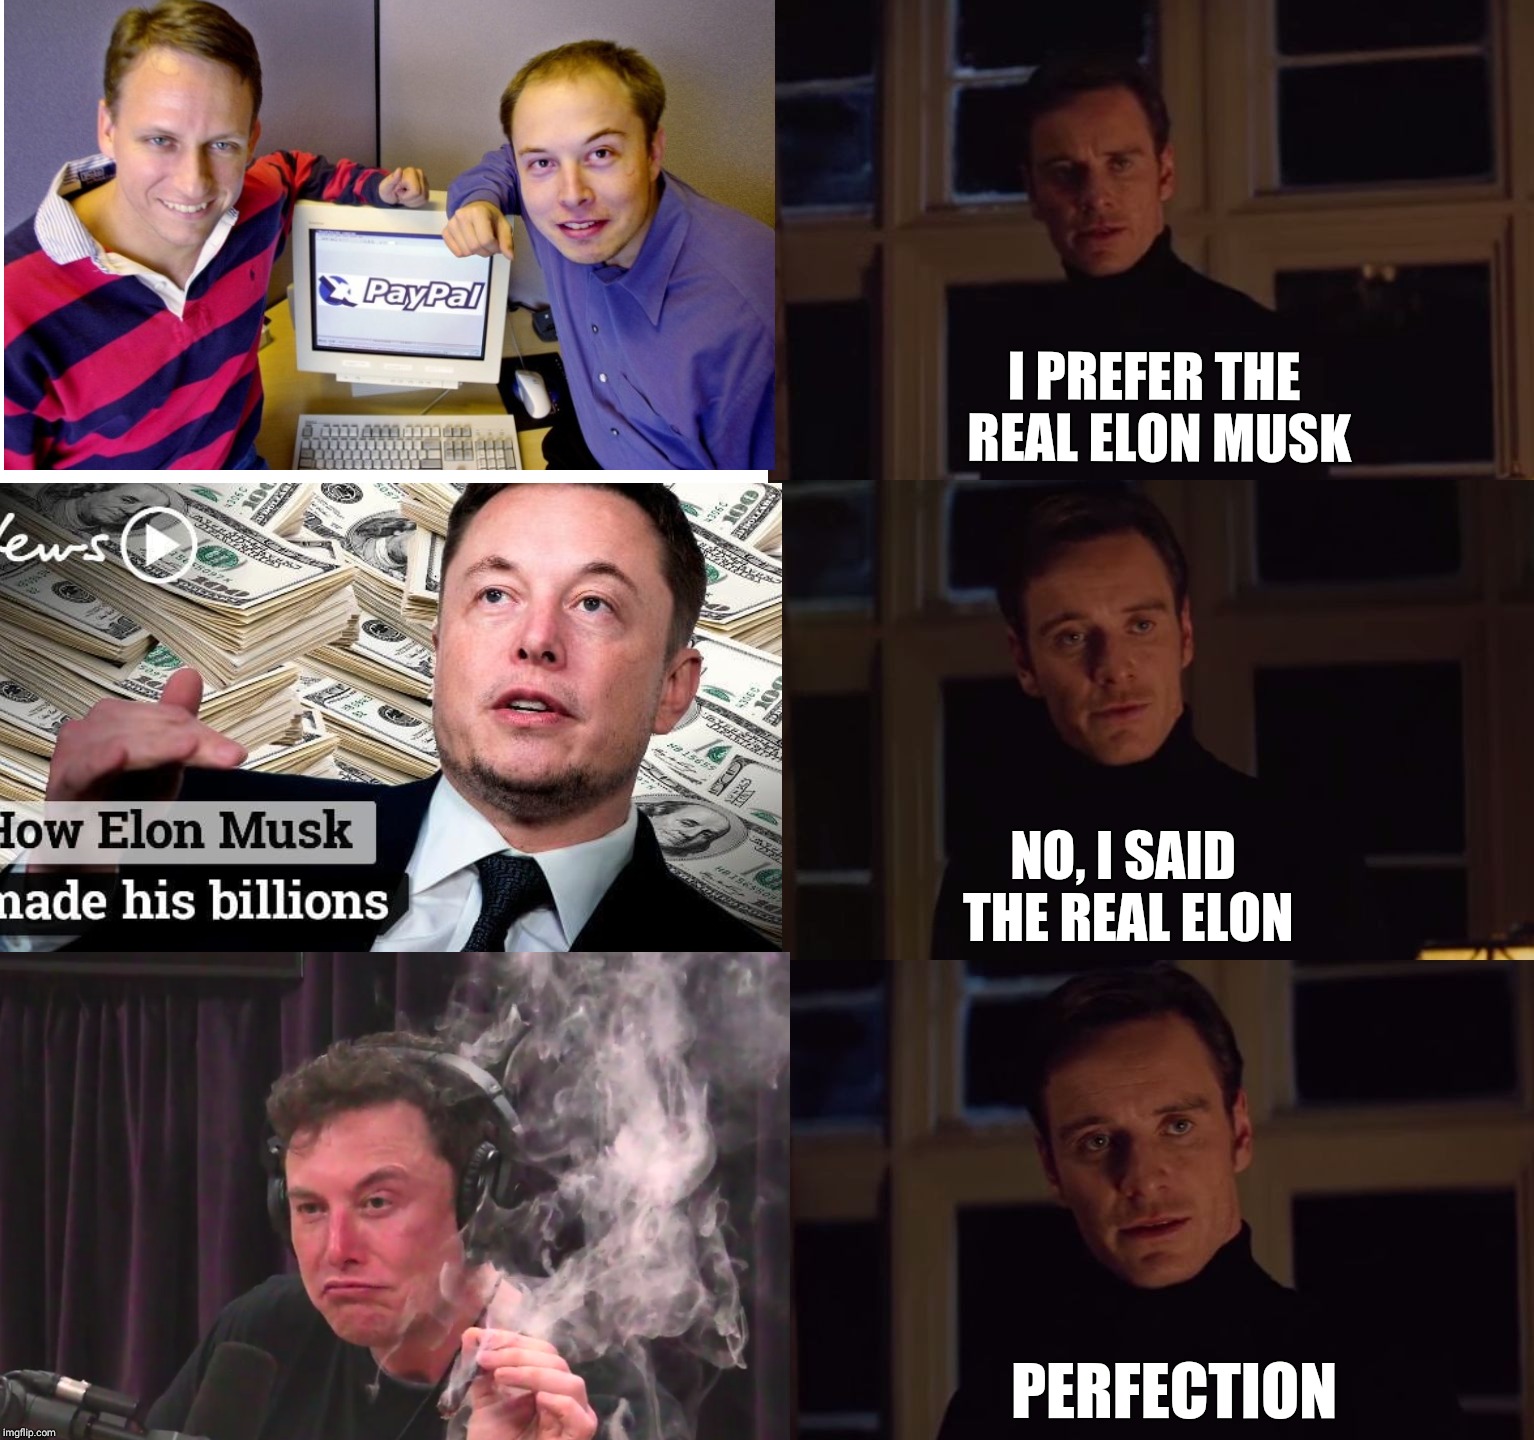 elon musk memes - PayPal I Prefer The Real Elon Musk Lll 05 103 low Elon Musk made his billions No, I Said The Real Elon Perfection imgflip.com